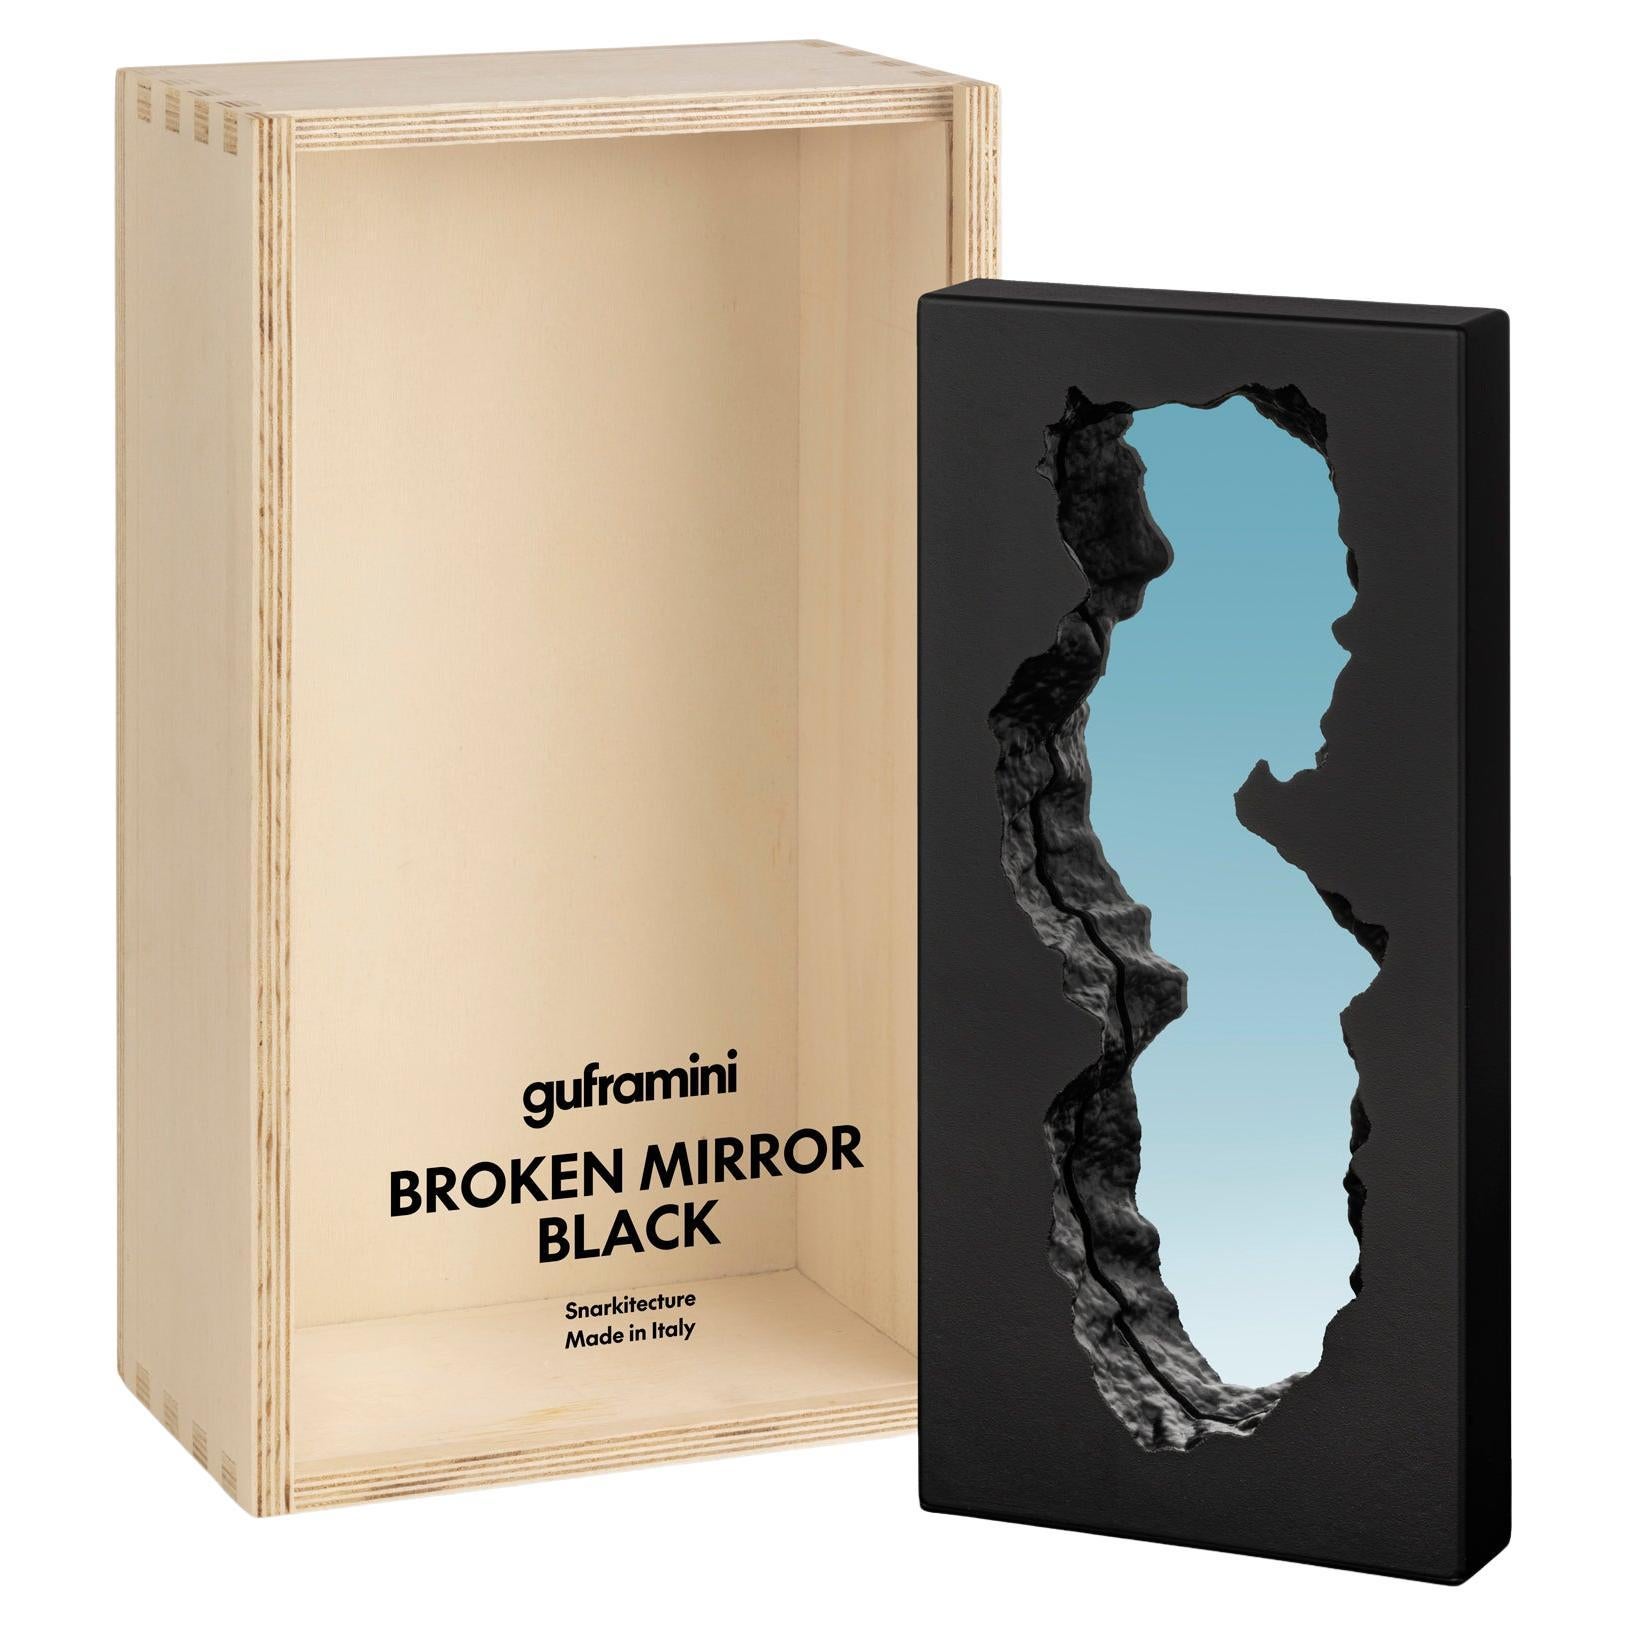 GUFRAMINI Broken Mirror Miniature by Snarkitecture - Black For Sale